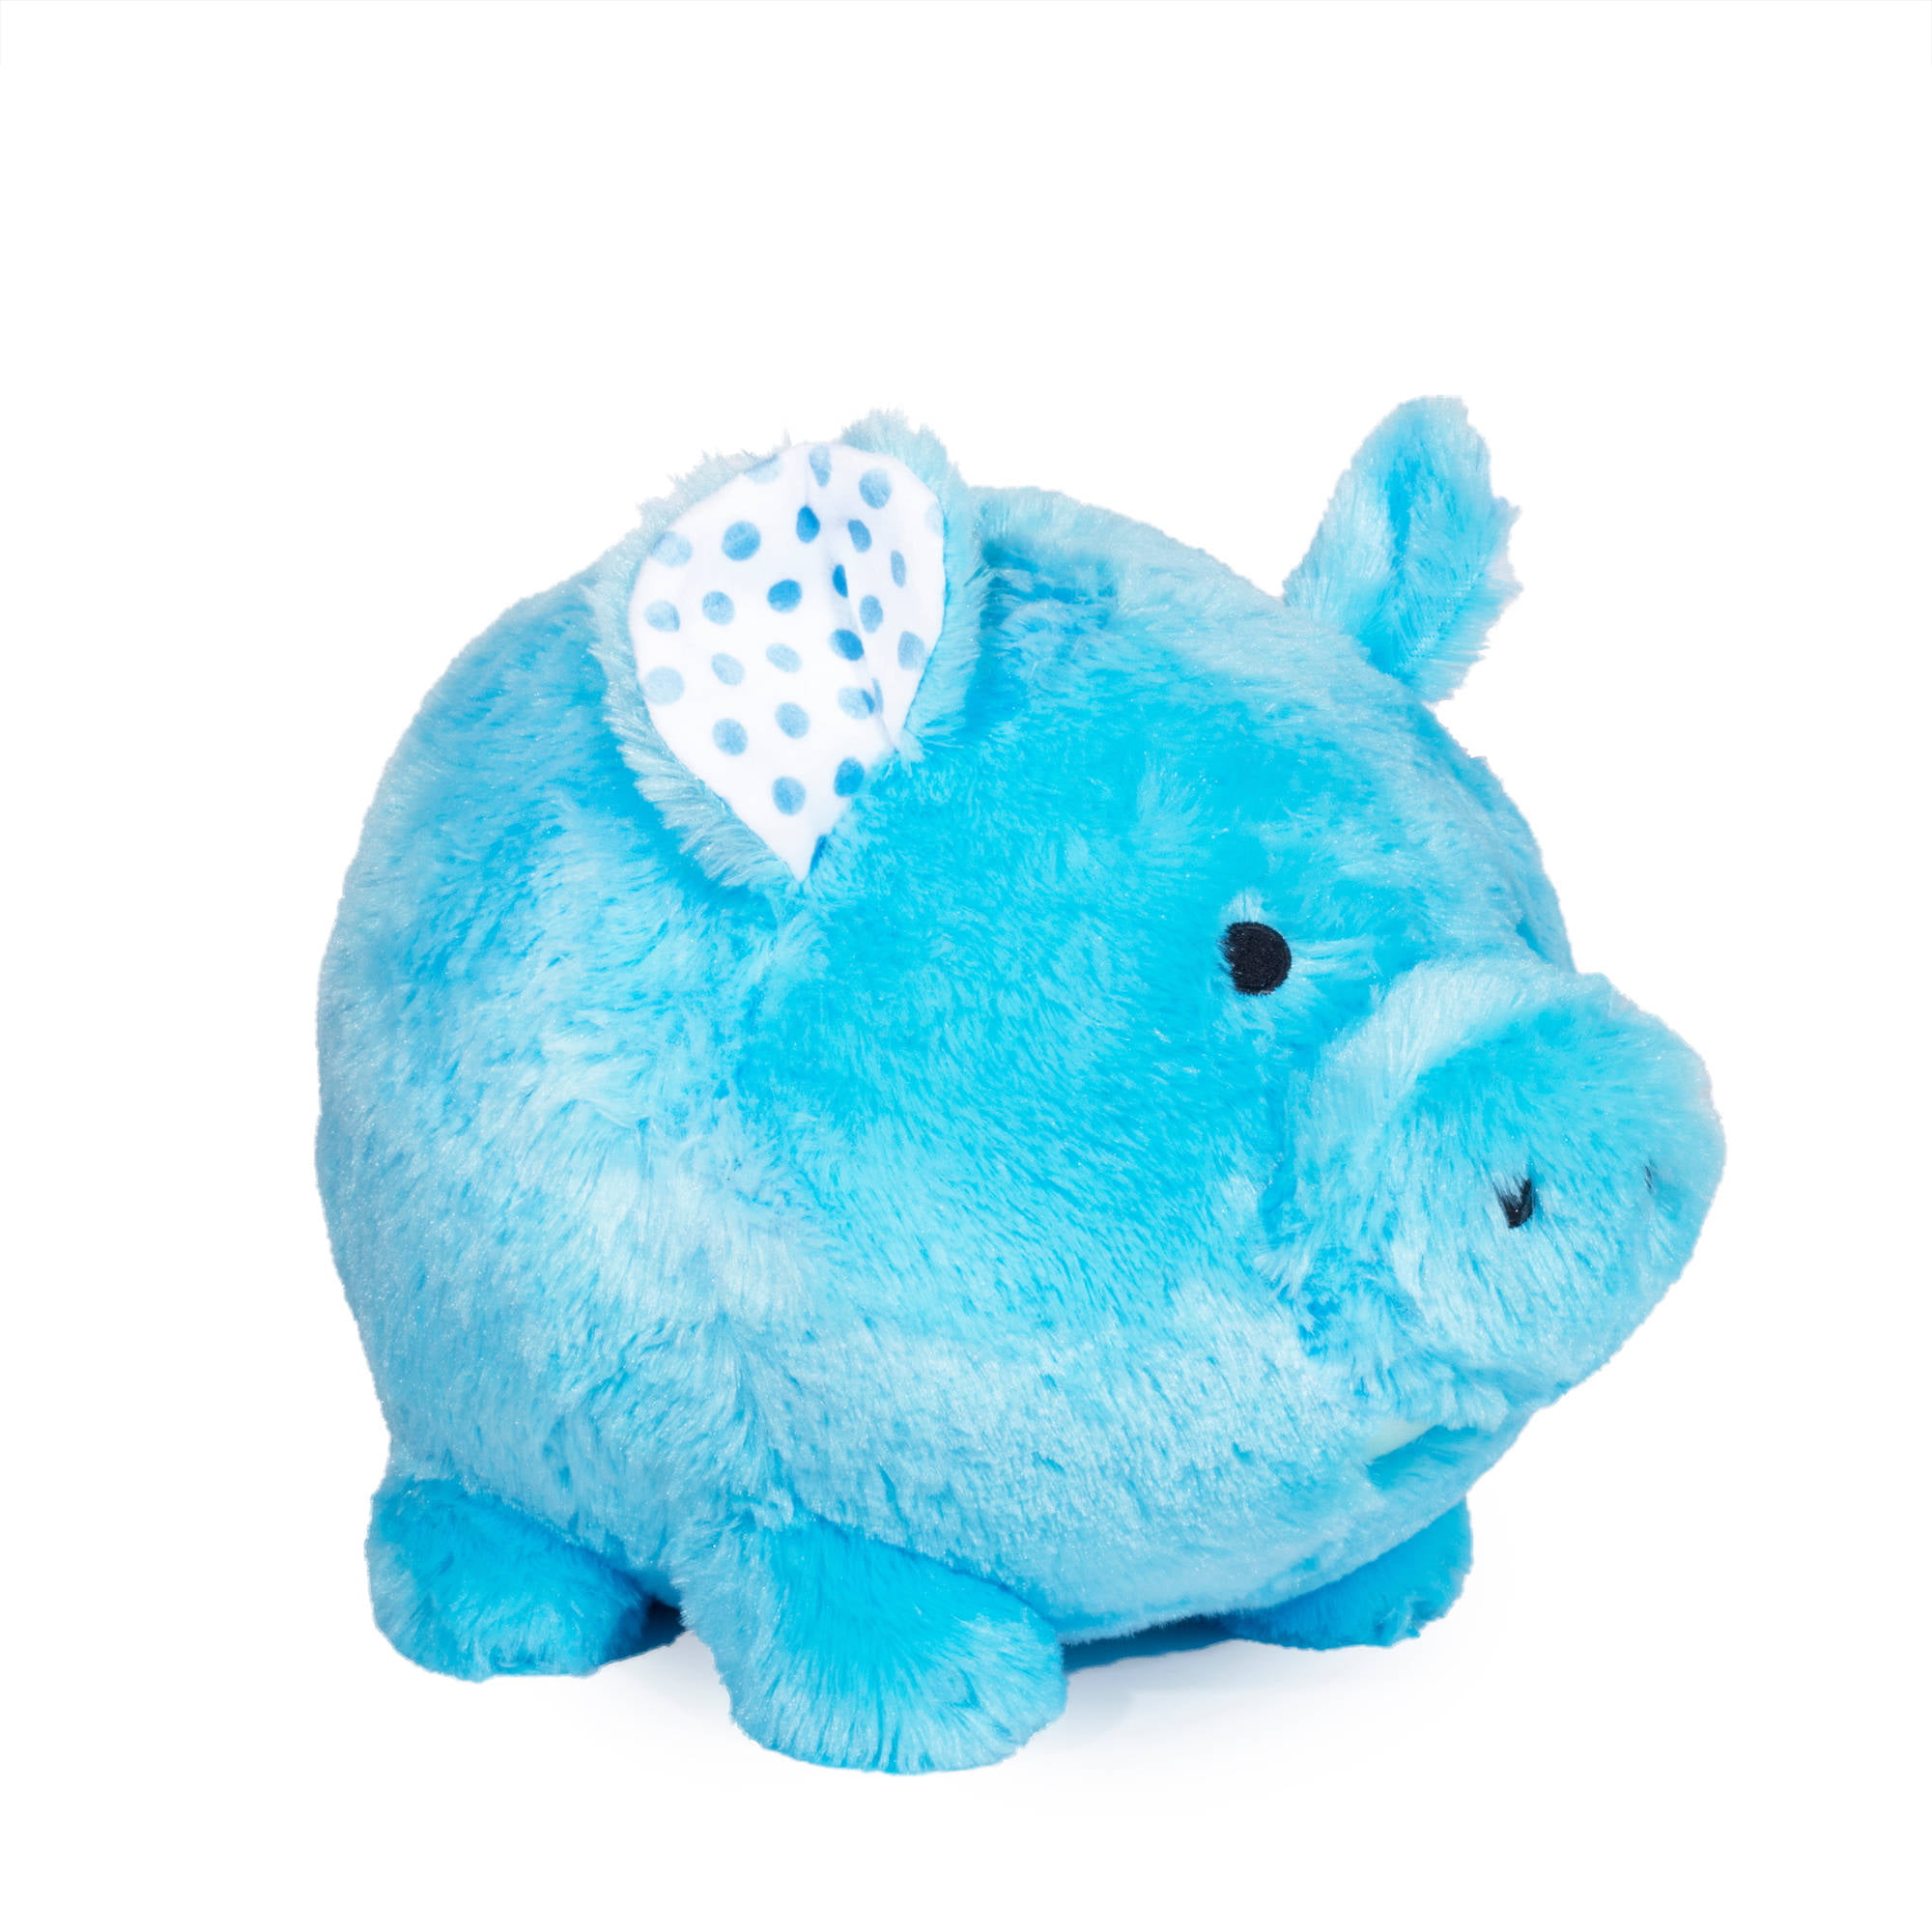 NEW CHILDREN'S BLUE SOFT PLUSH TOY MONEY BOX PIGGY BANK 